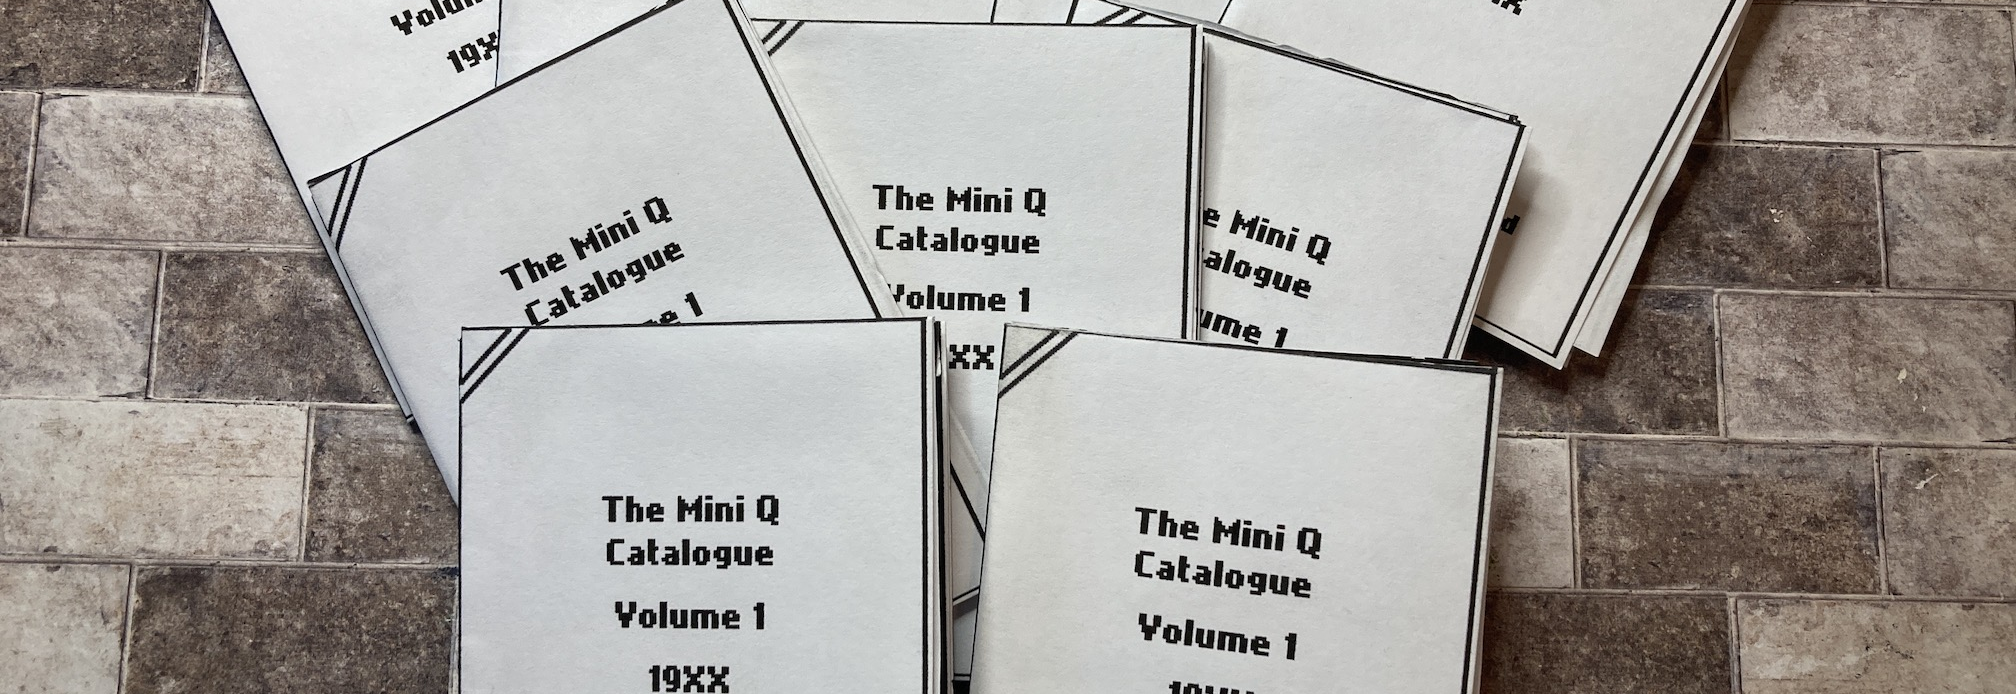 The Mini Q Catalogue - Volume 1